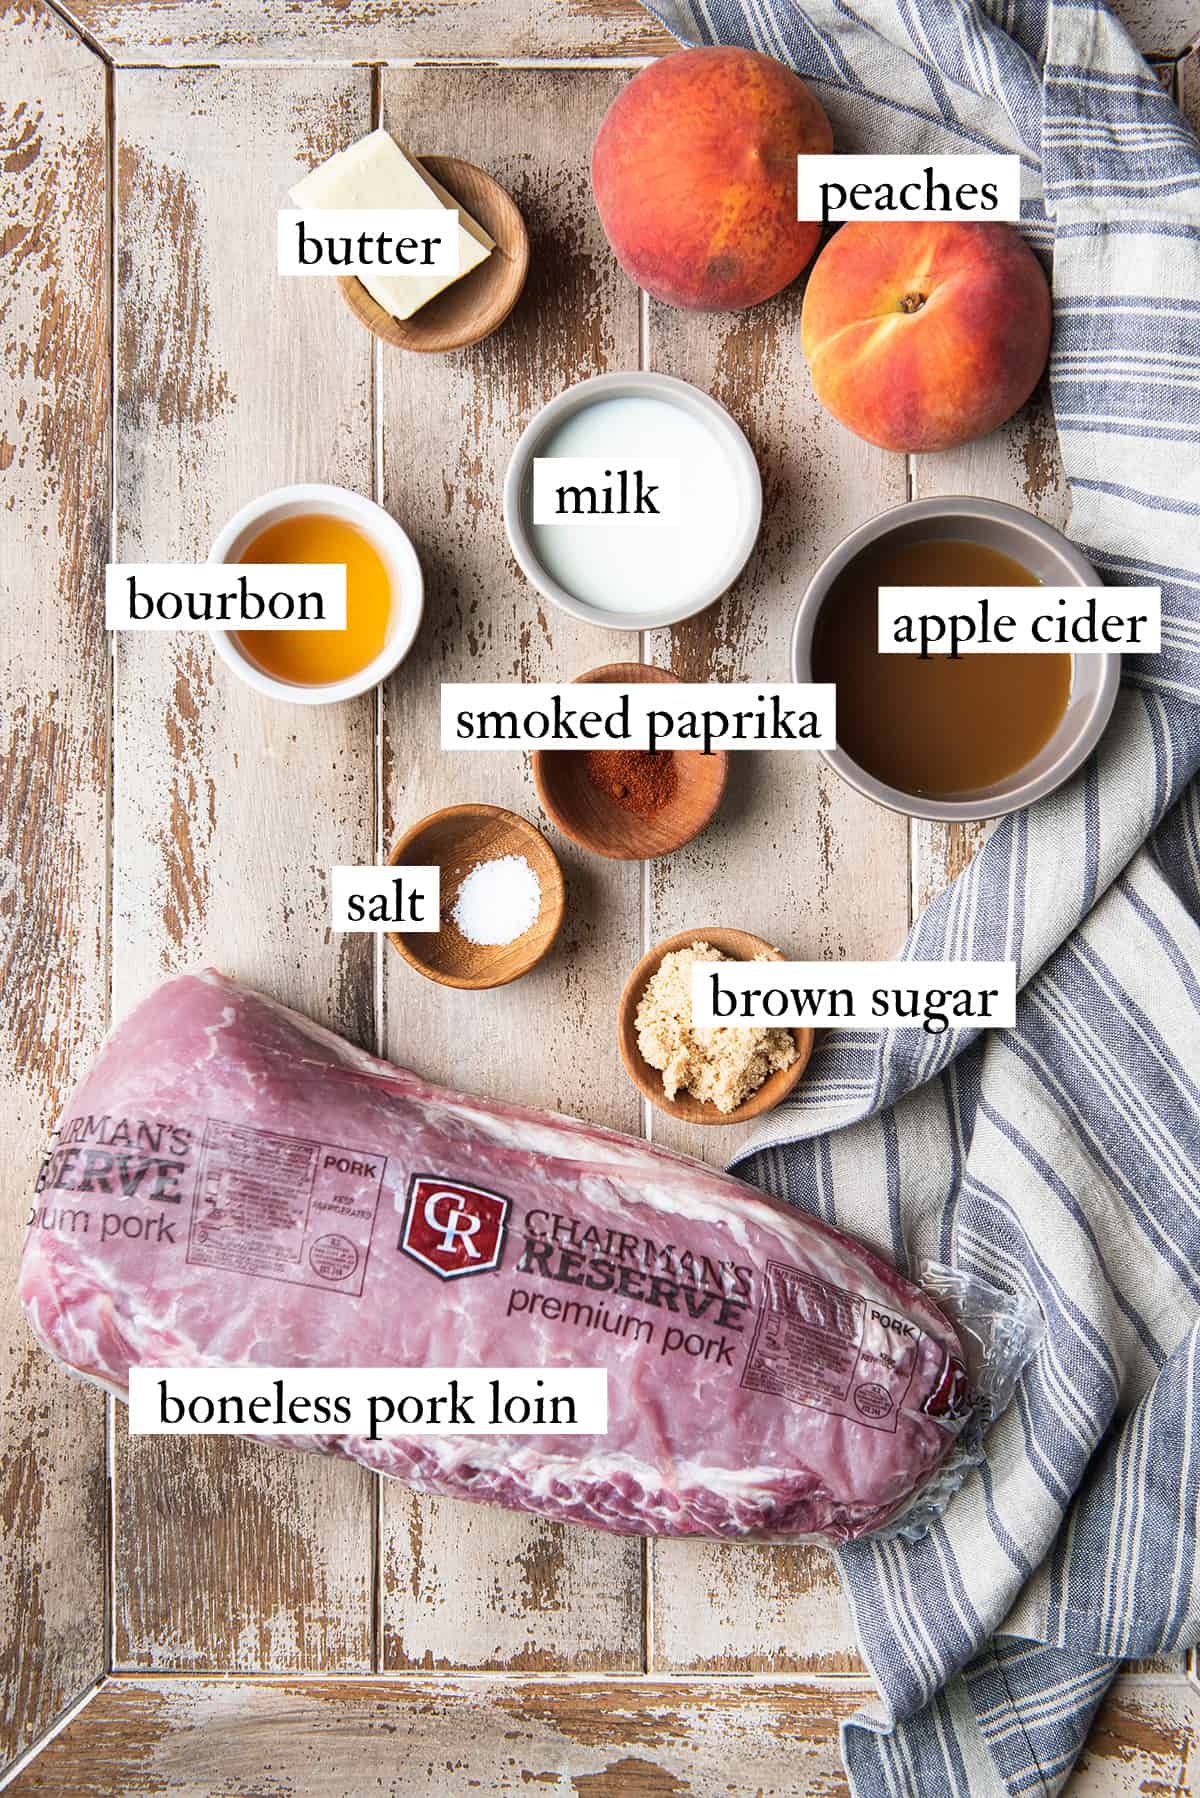 ingredients for boneless pork chops on wooden table